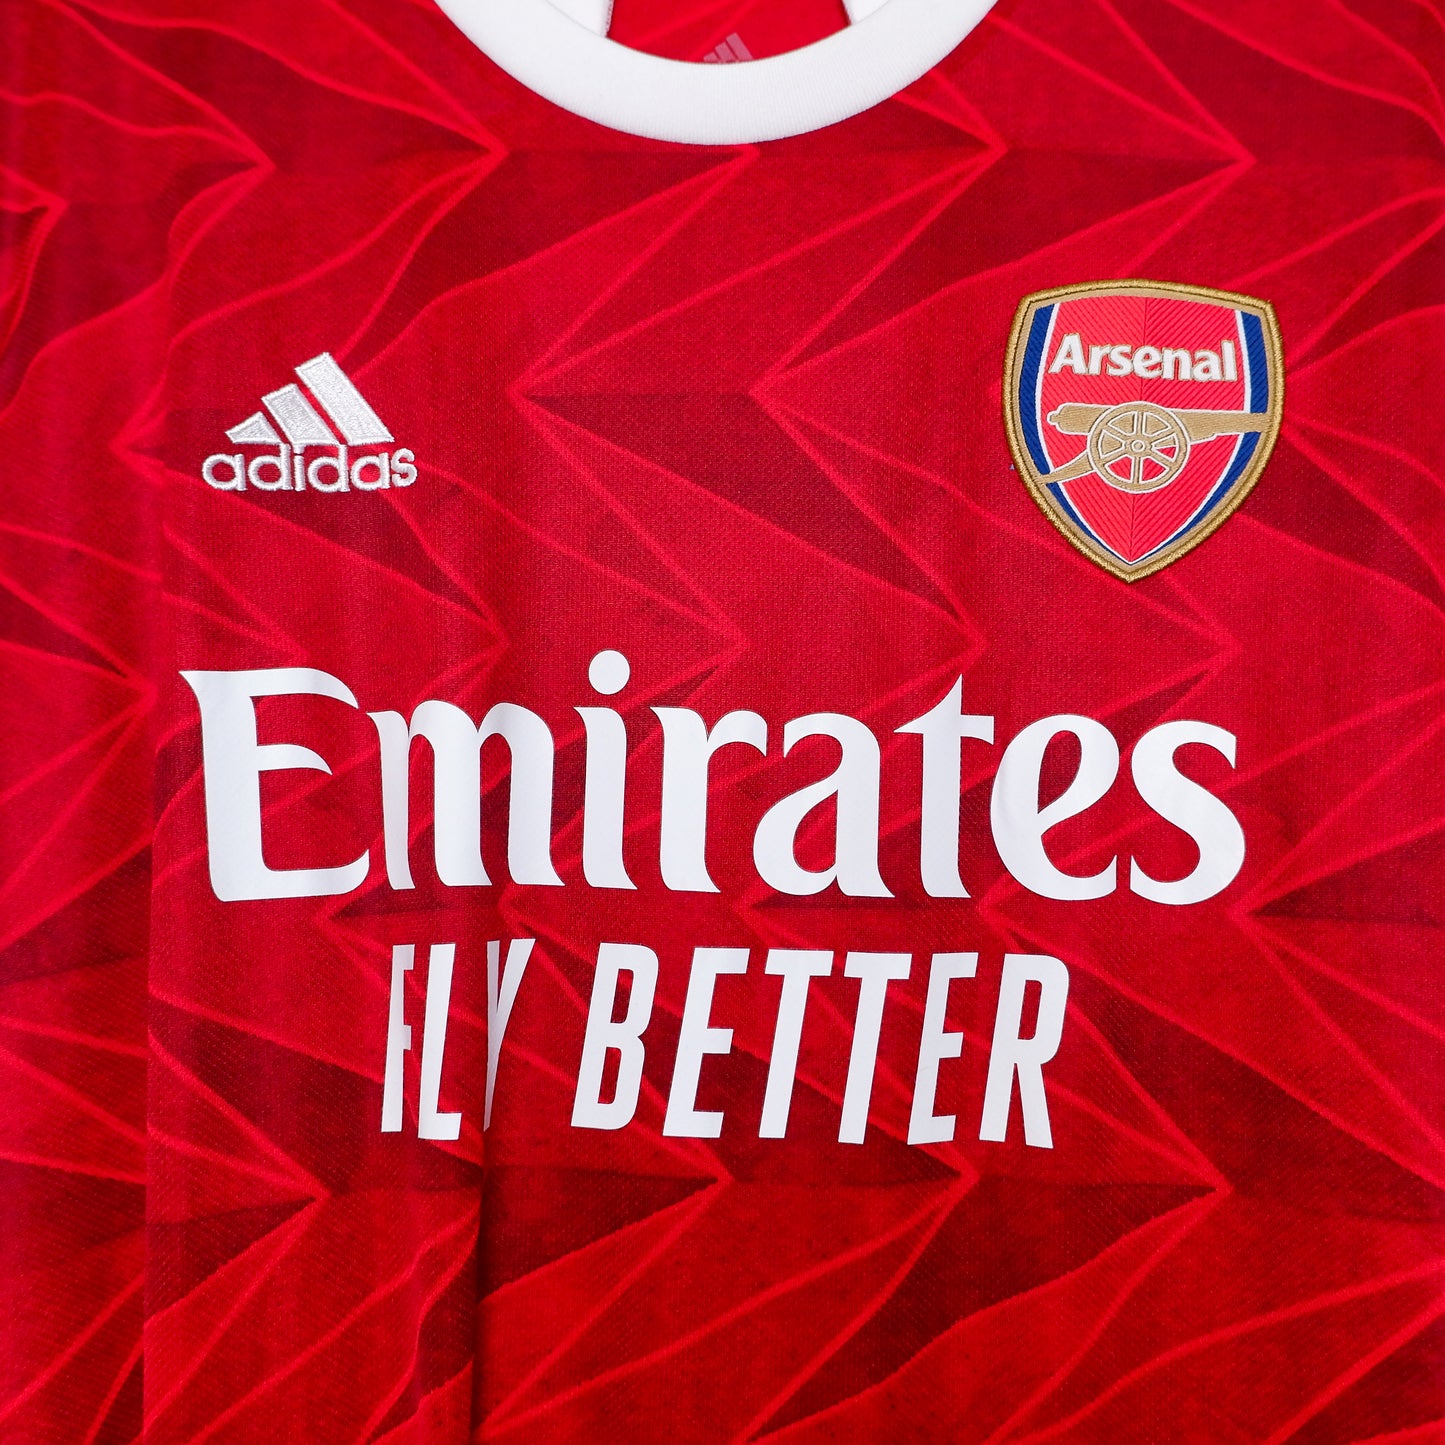 Authentic Arsenal 2020/21 Home - Martin Ødegaard #11 Size XL